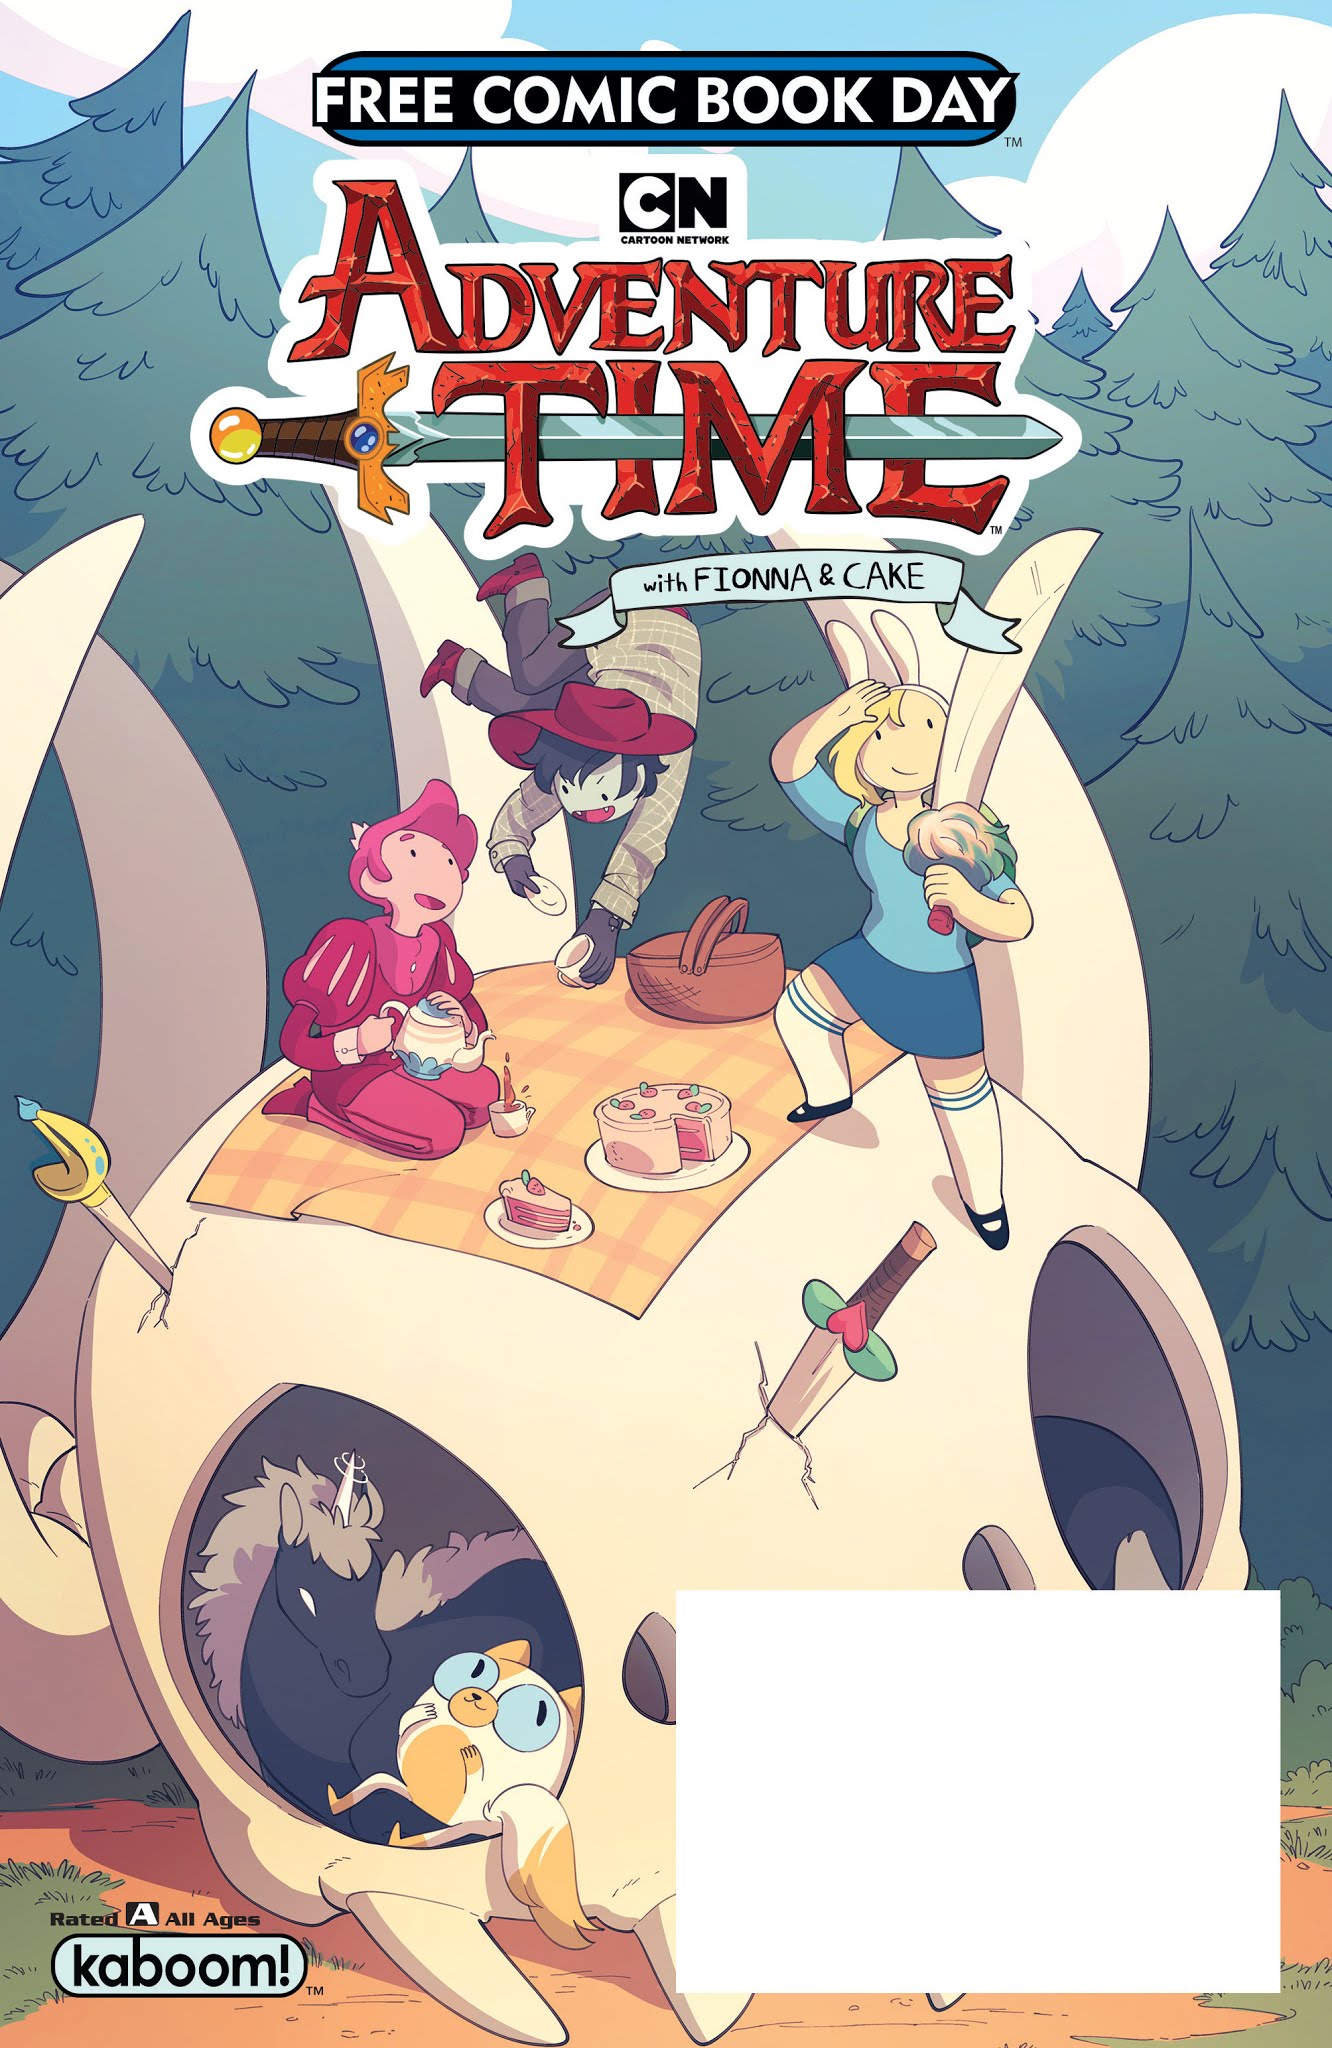 Fionna Cake Adventure Time Shemale Porn - Free Comic Book Day 2018 Adventure Time With Fionna And Cake | Read Free  Comic Book Day 2018 Adventure Time With Fionna And Cake comic online in  high quality. Read Full Comic